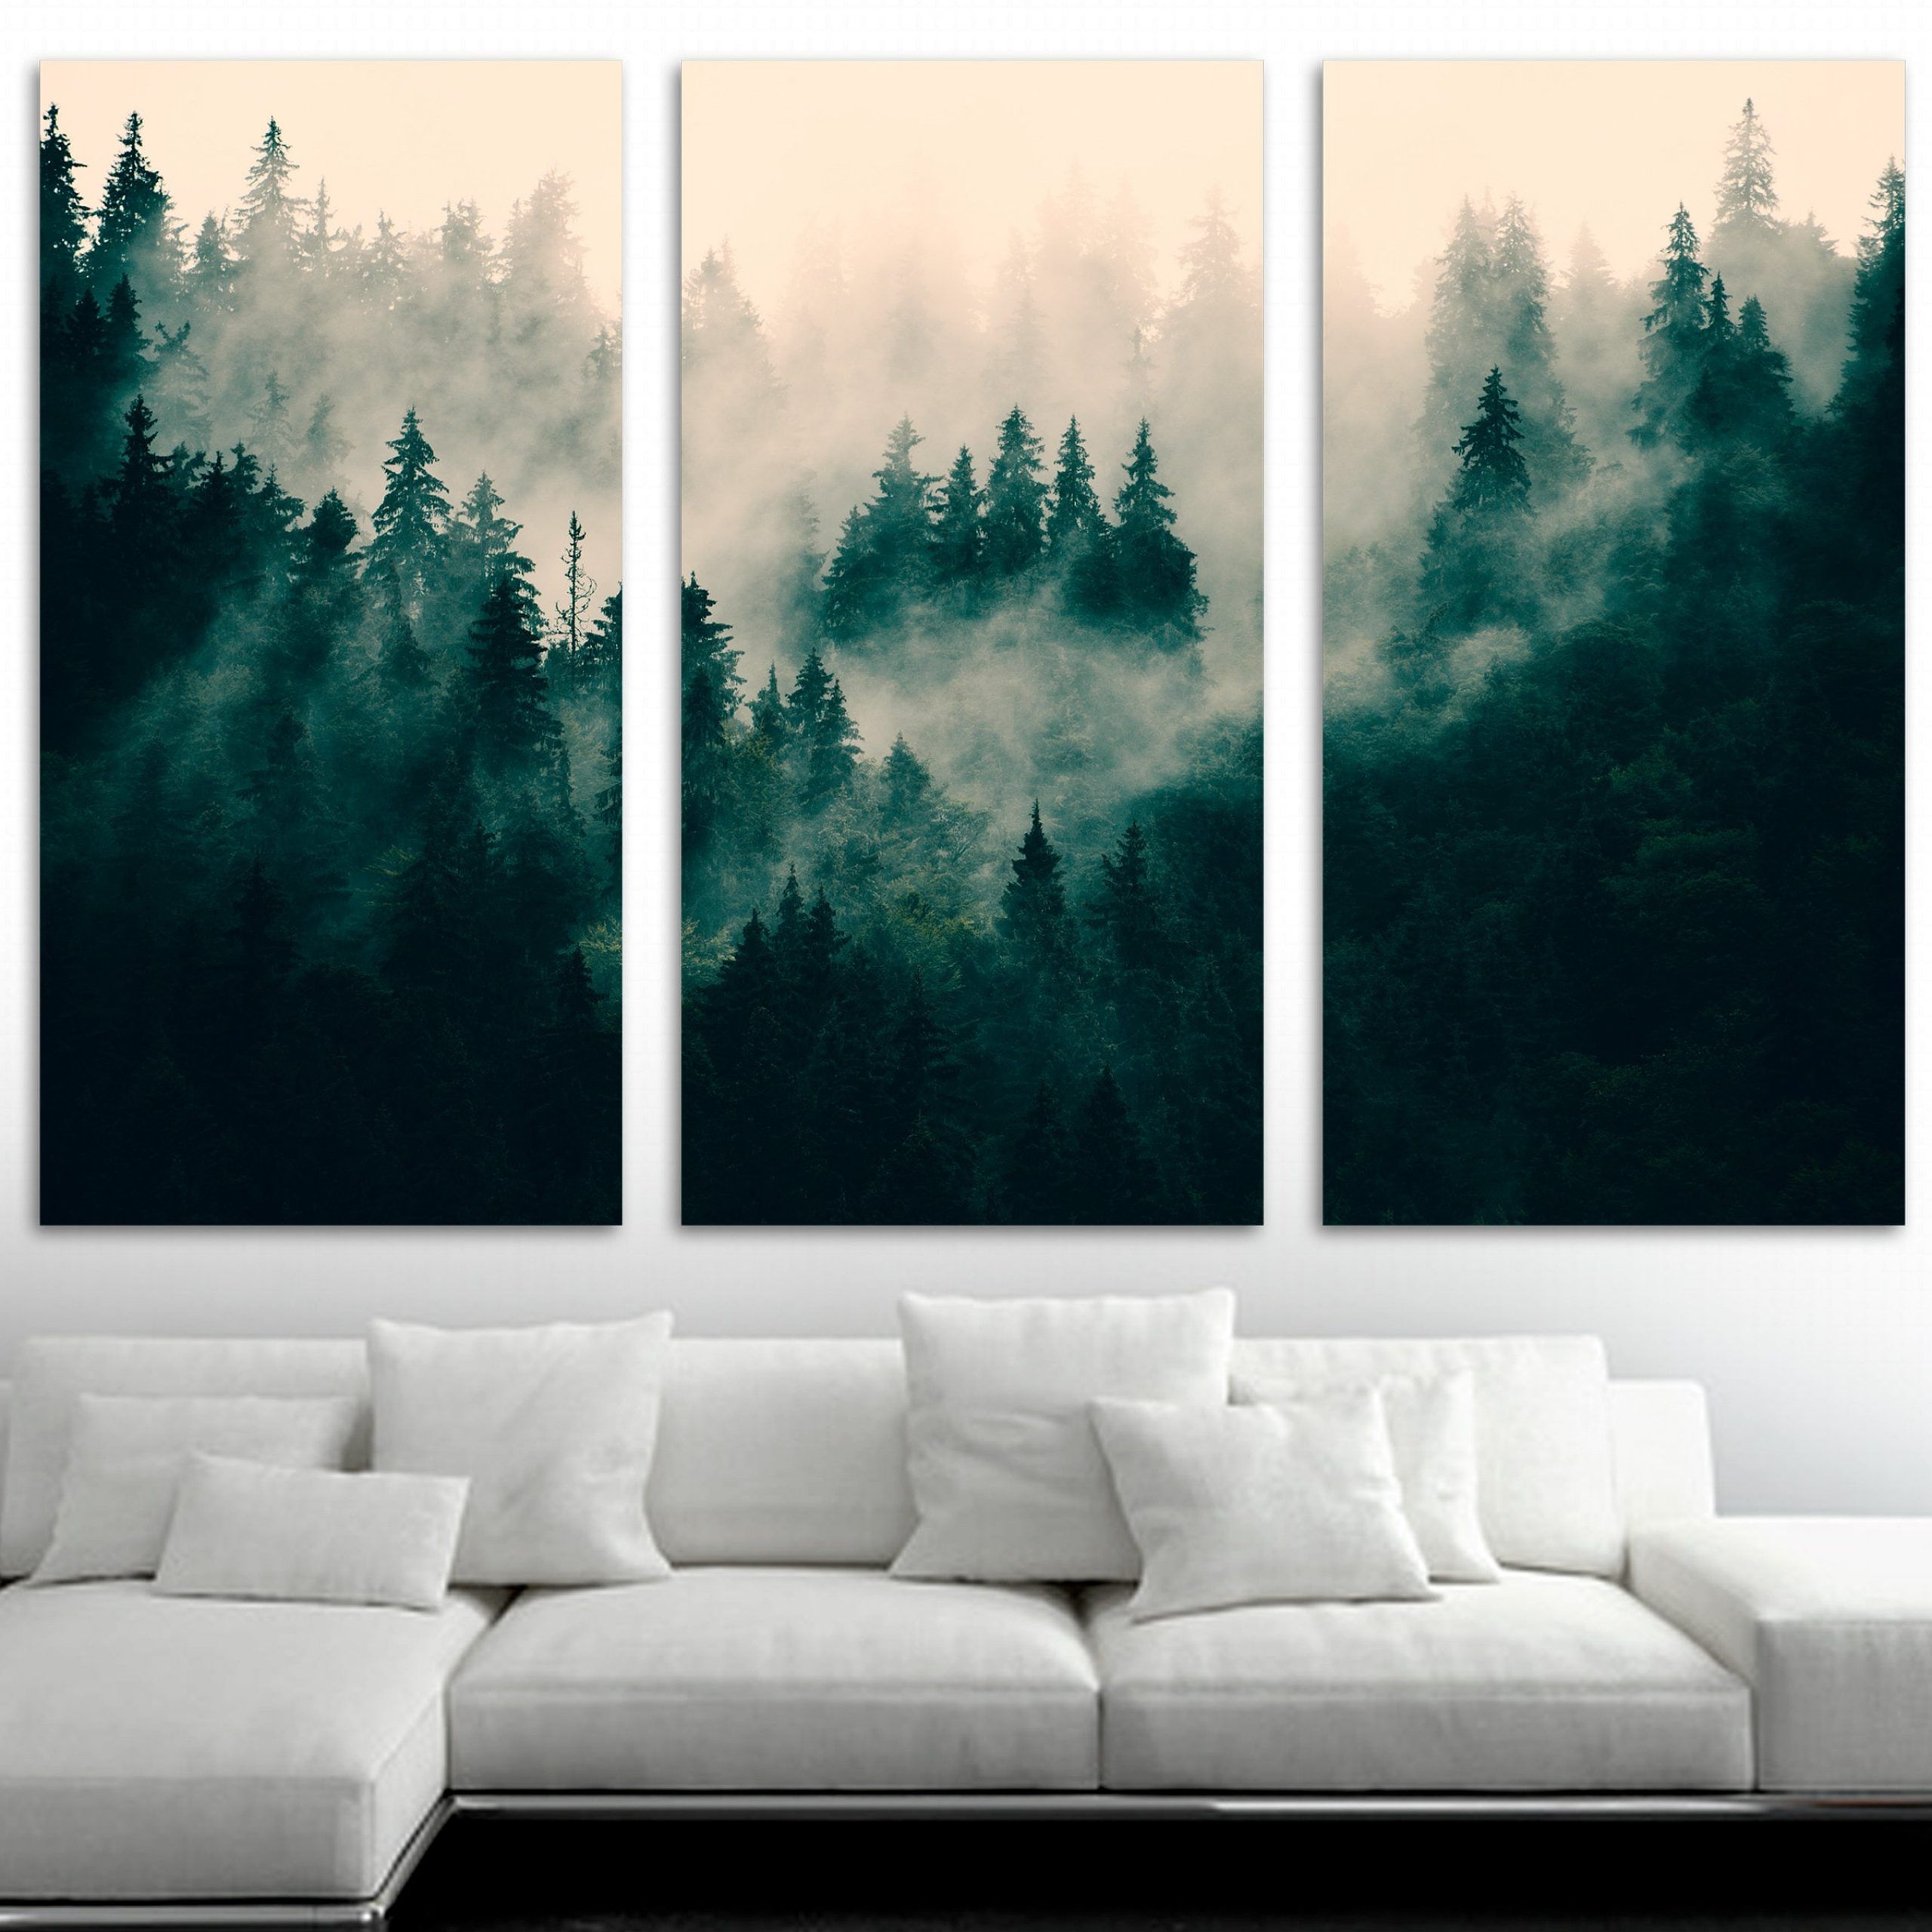 Pine Forest Wall Art Regarding Popular Foggy Forest Wall Art Canvas Print (View 2 of 15)